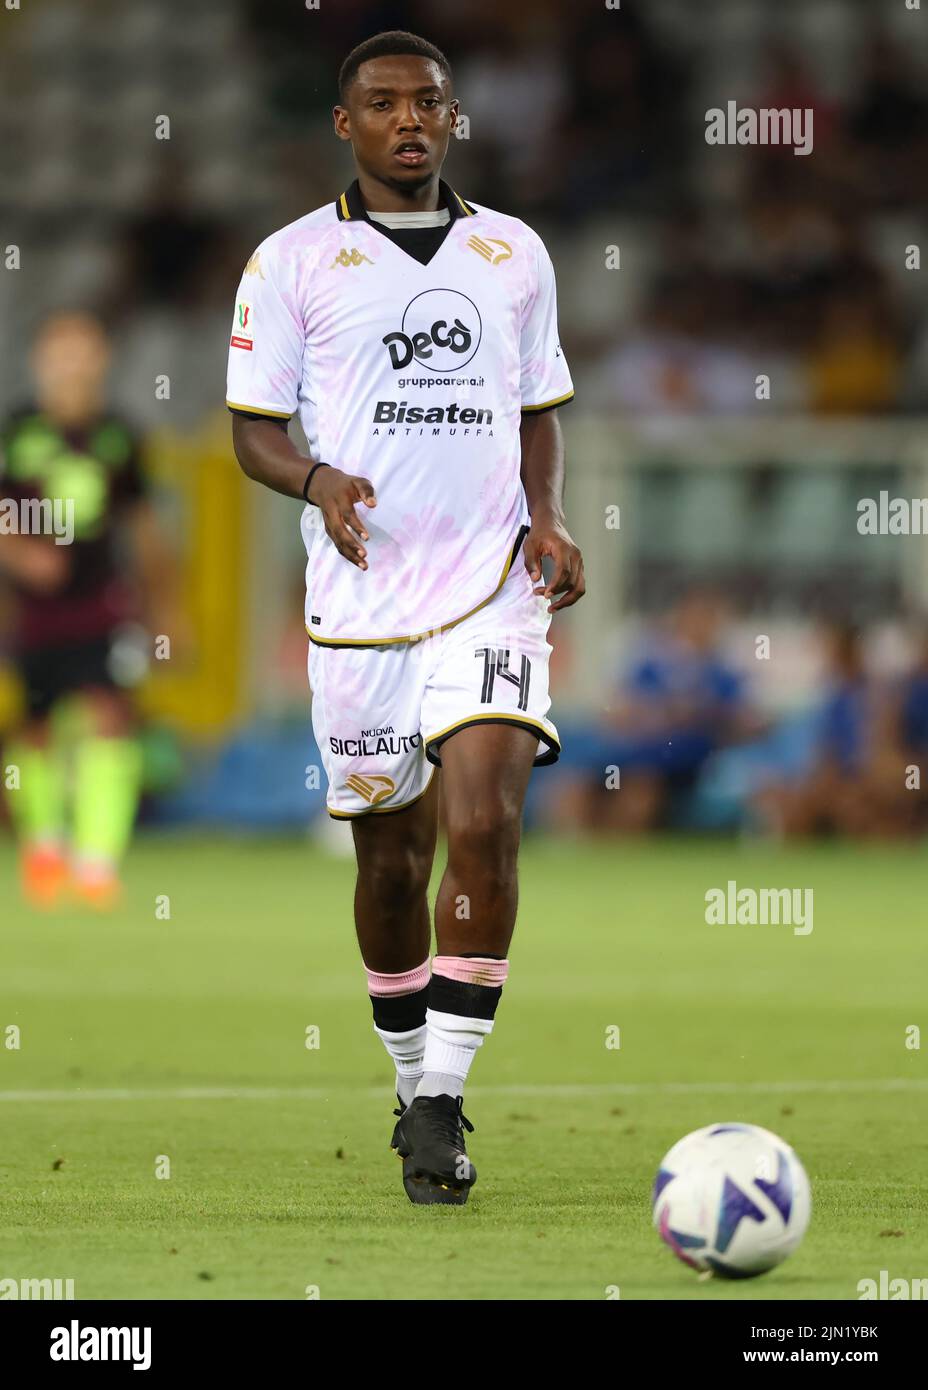 Palermo-Avellino 1-0: photogallery - Palermo F.C.